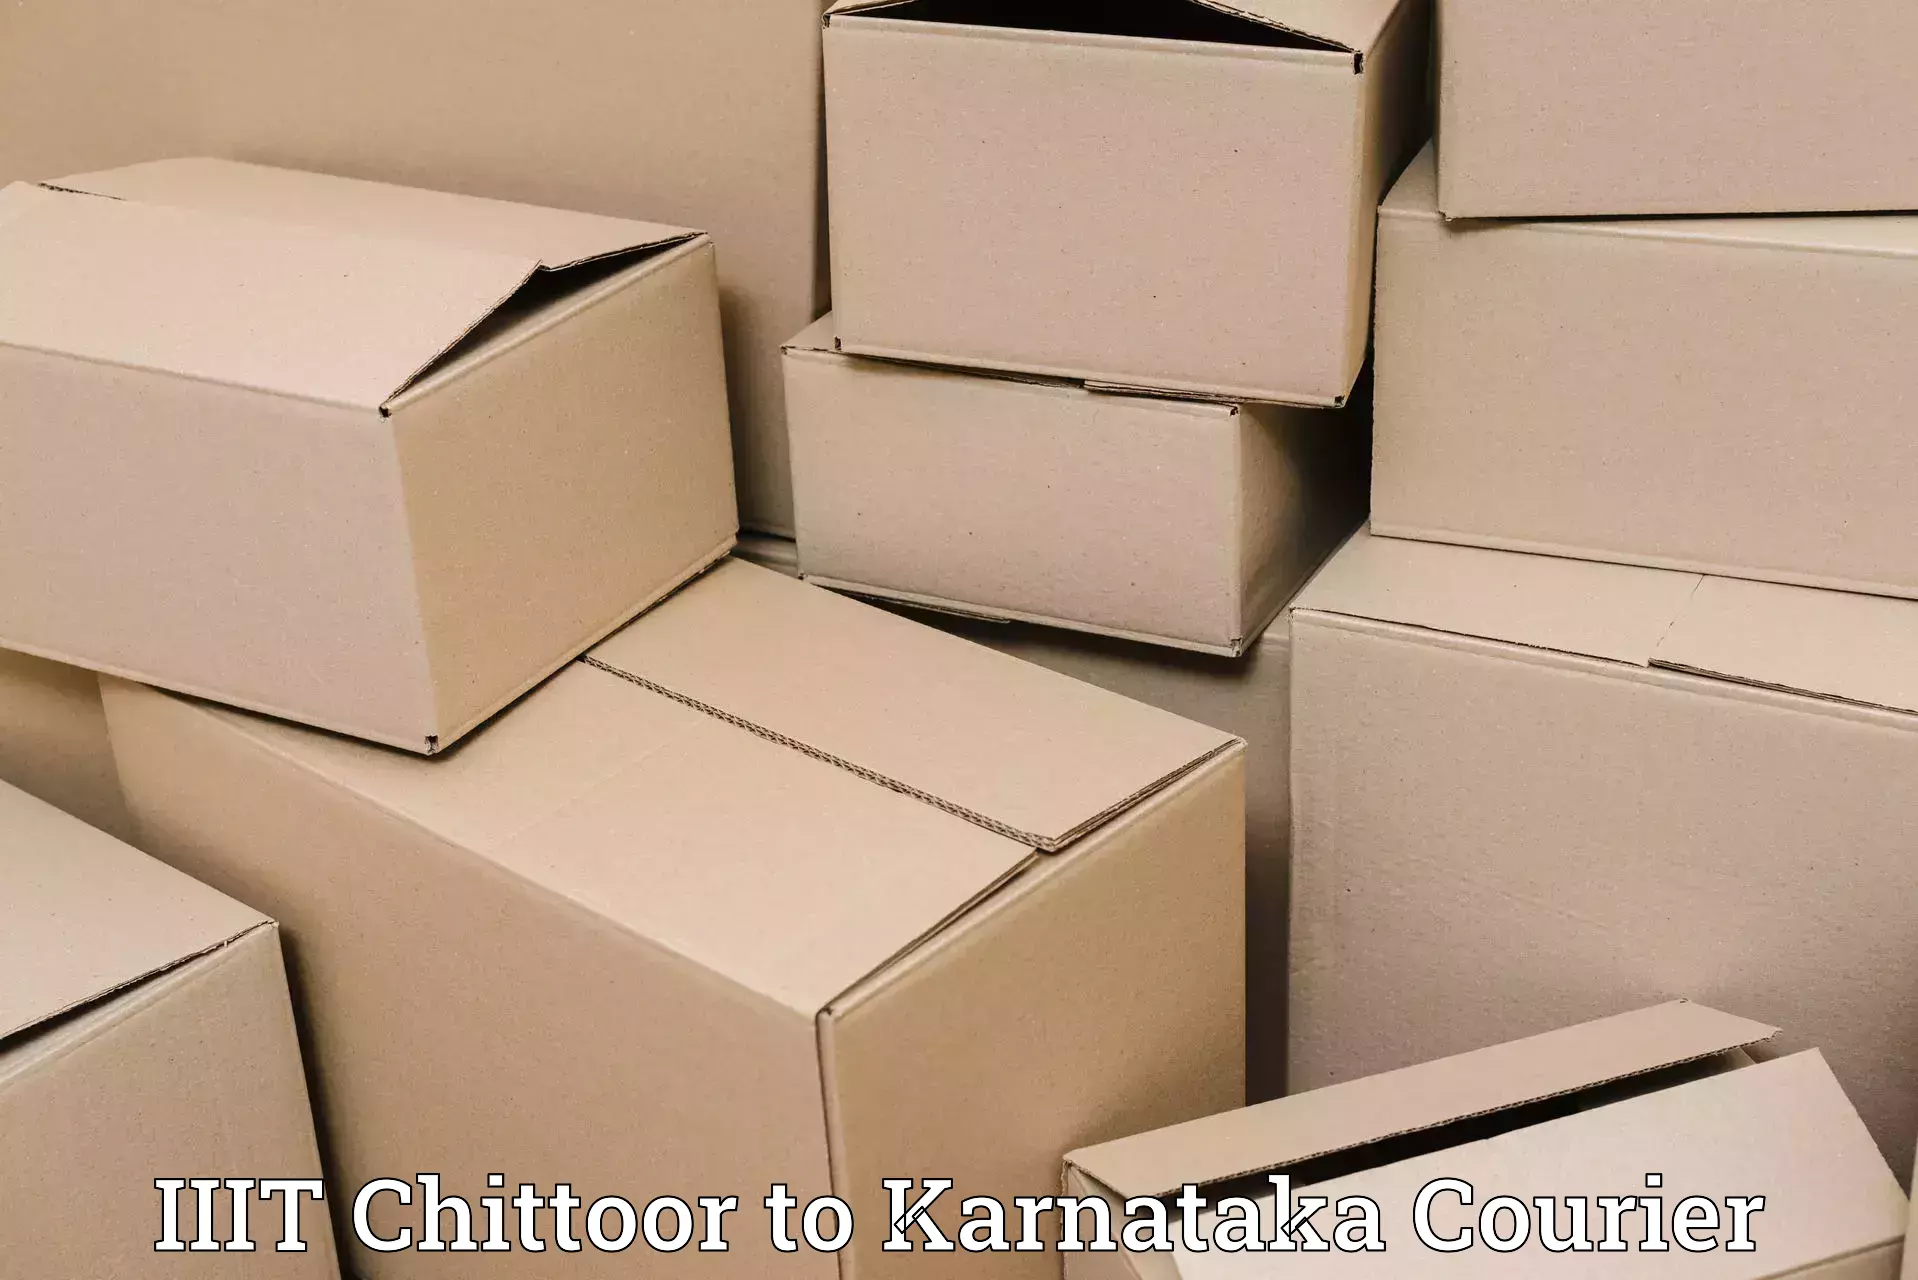 Fast delivery service IIIT Chittoor to Uttara Kannada